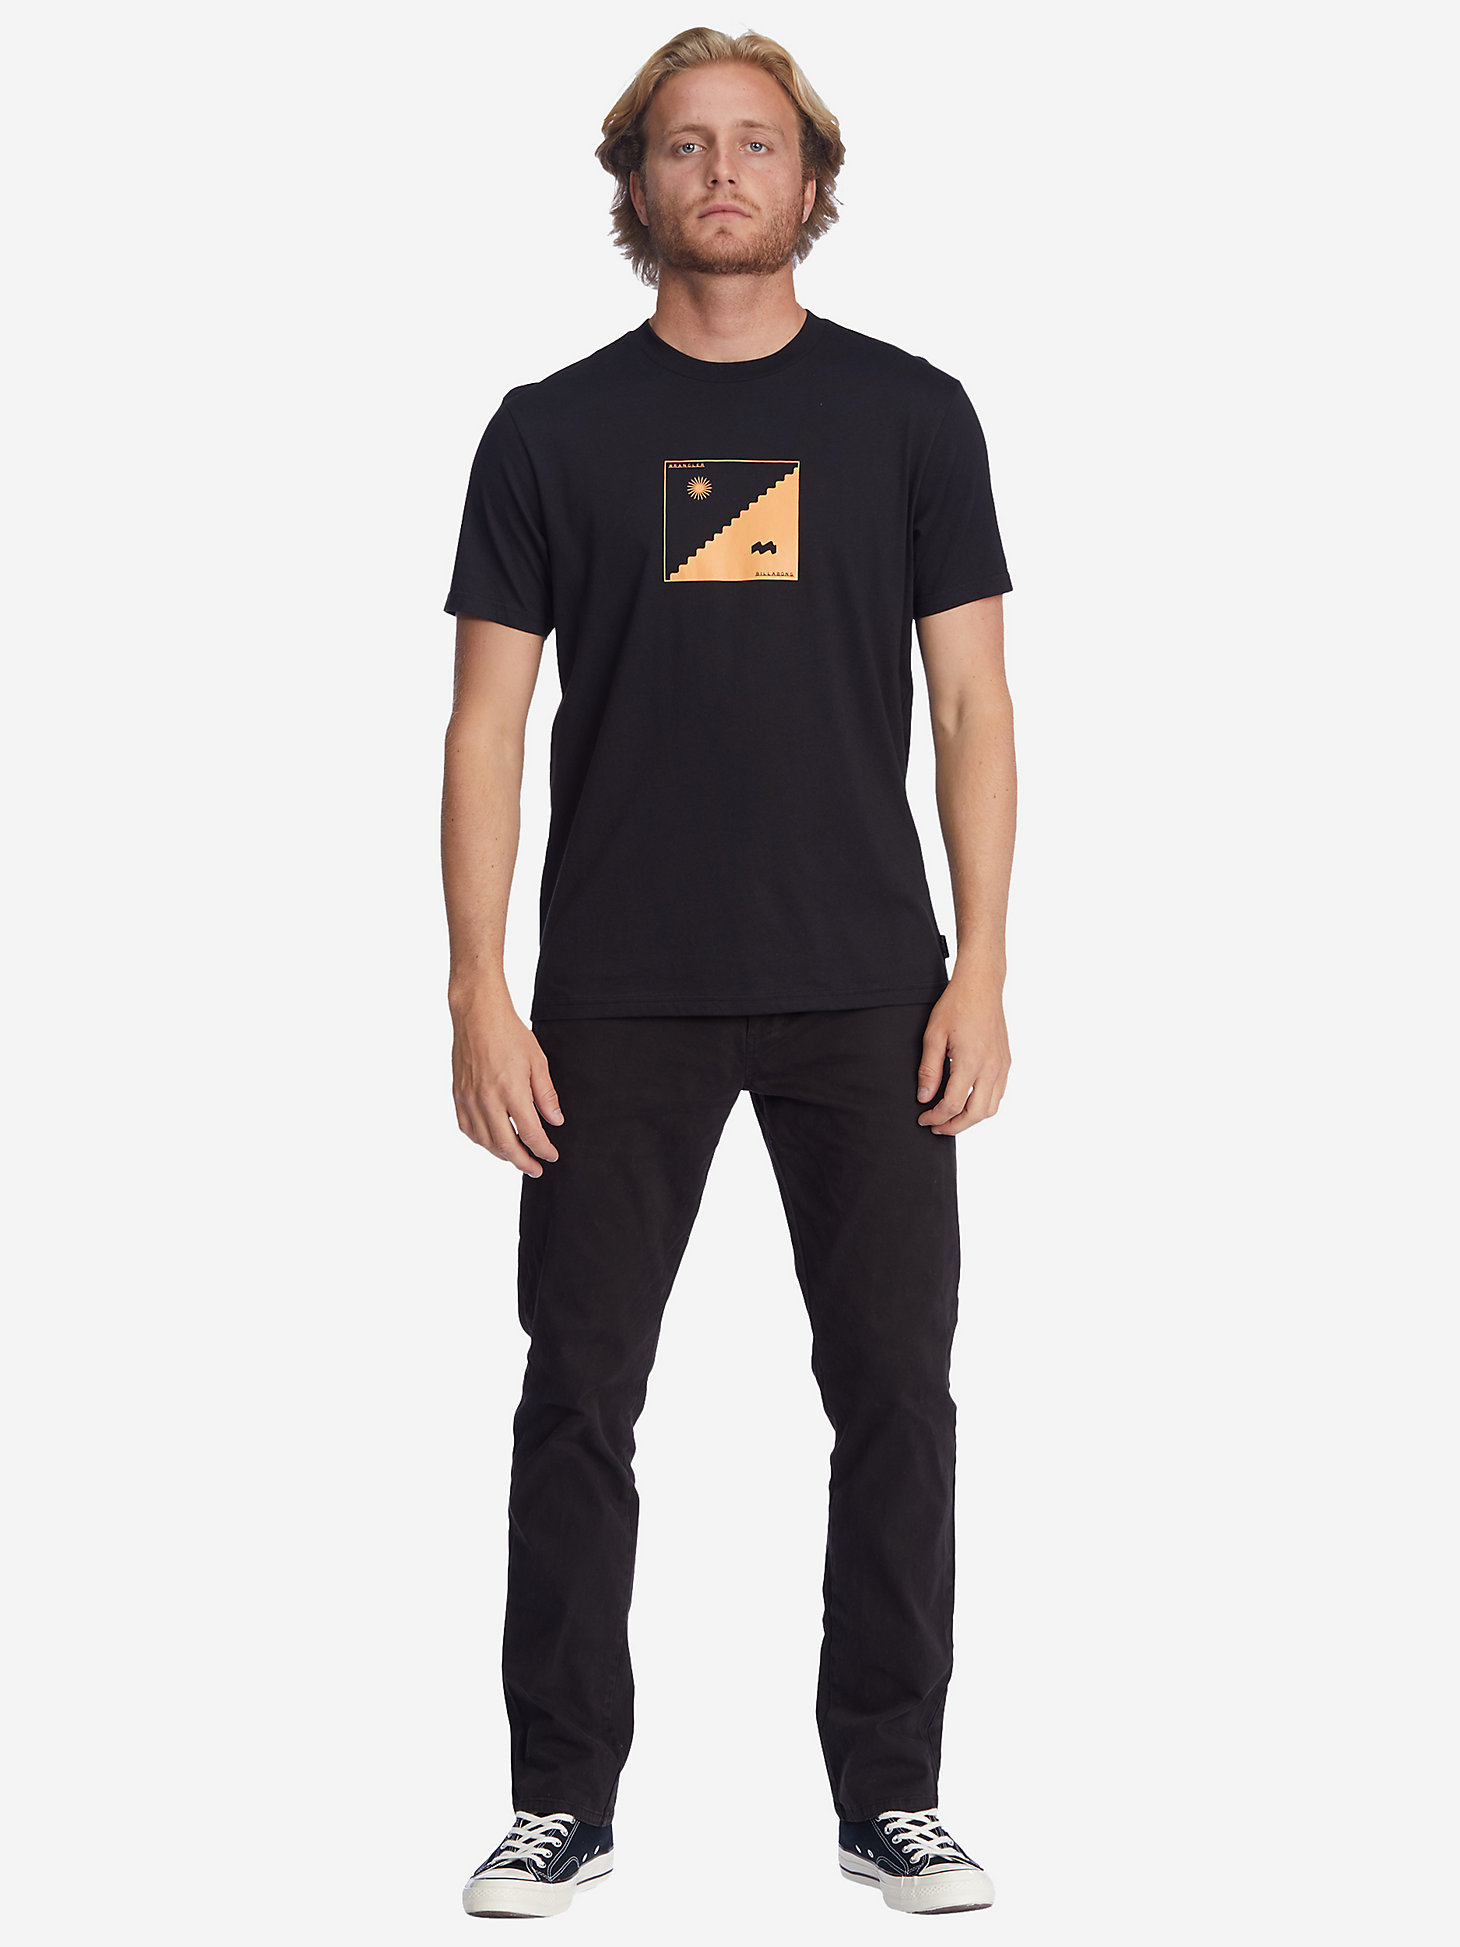 Billabong x Wrangler® Men's United By Graphic T-Shirt in Black alternative view 4